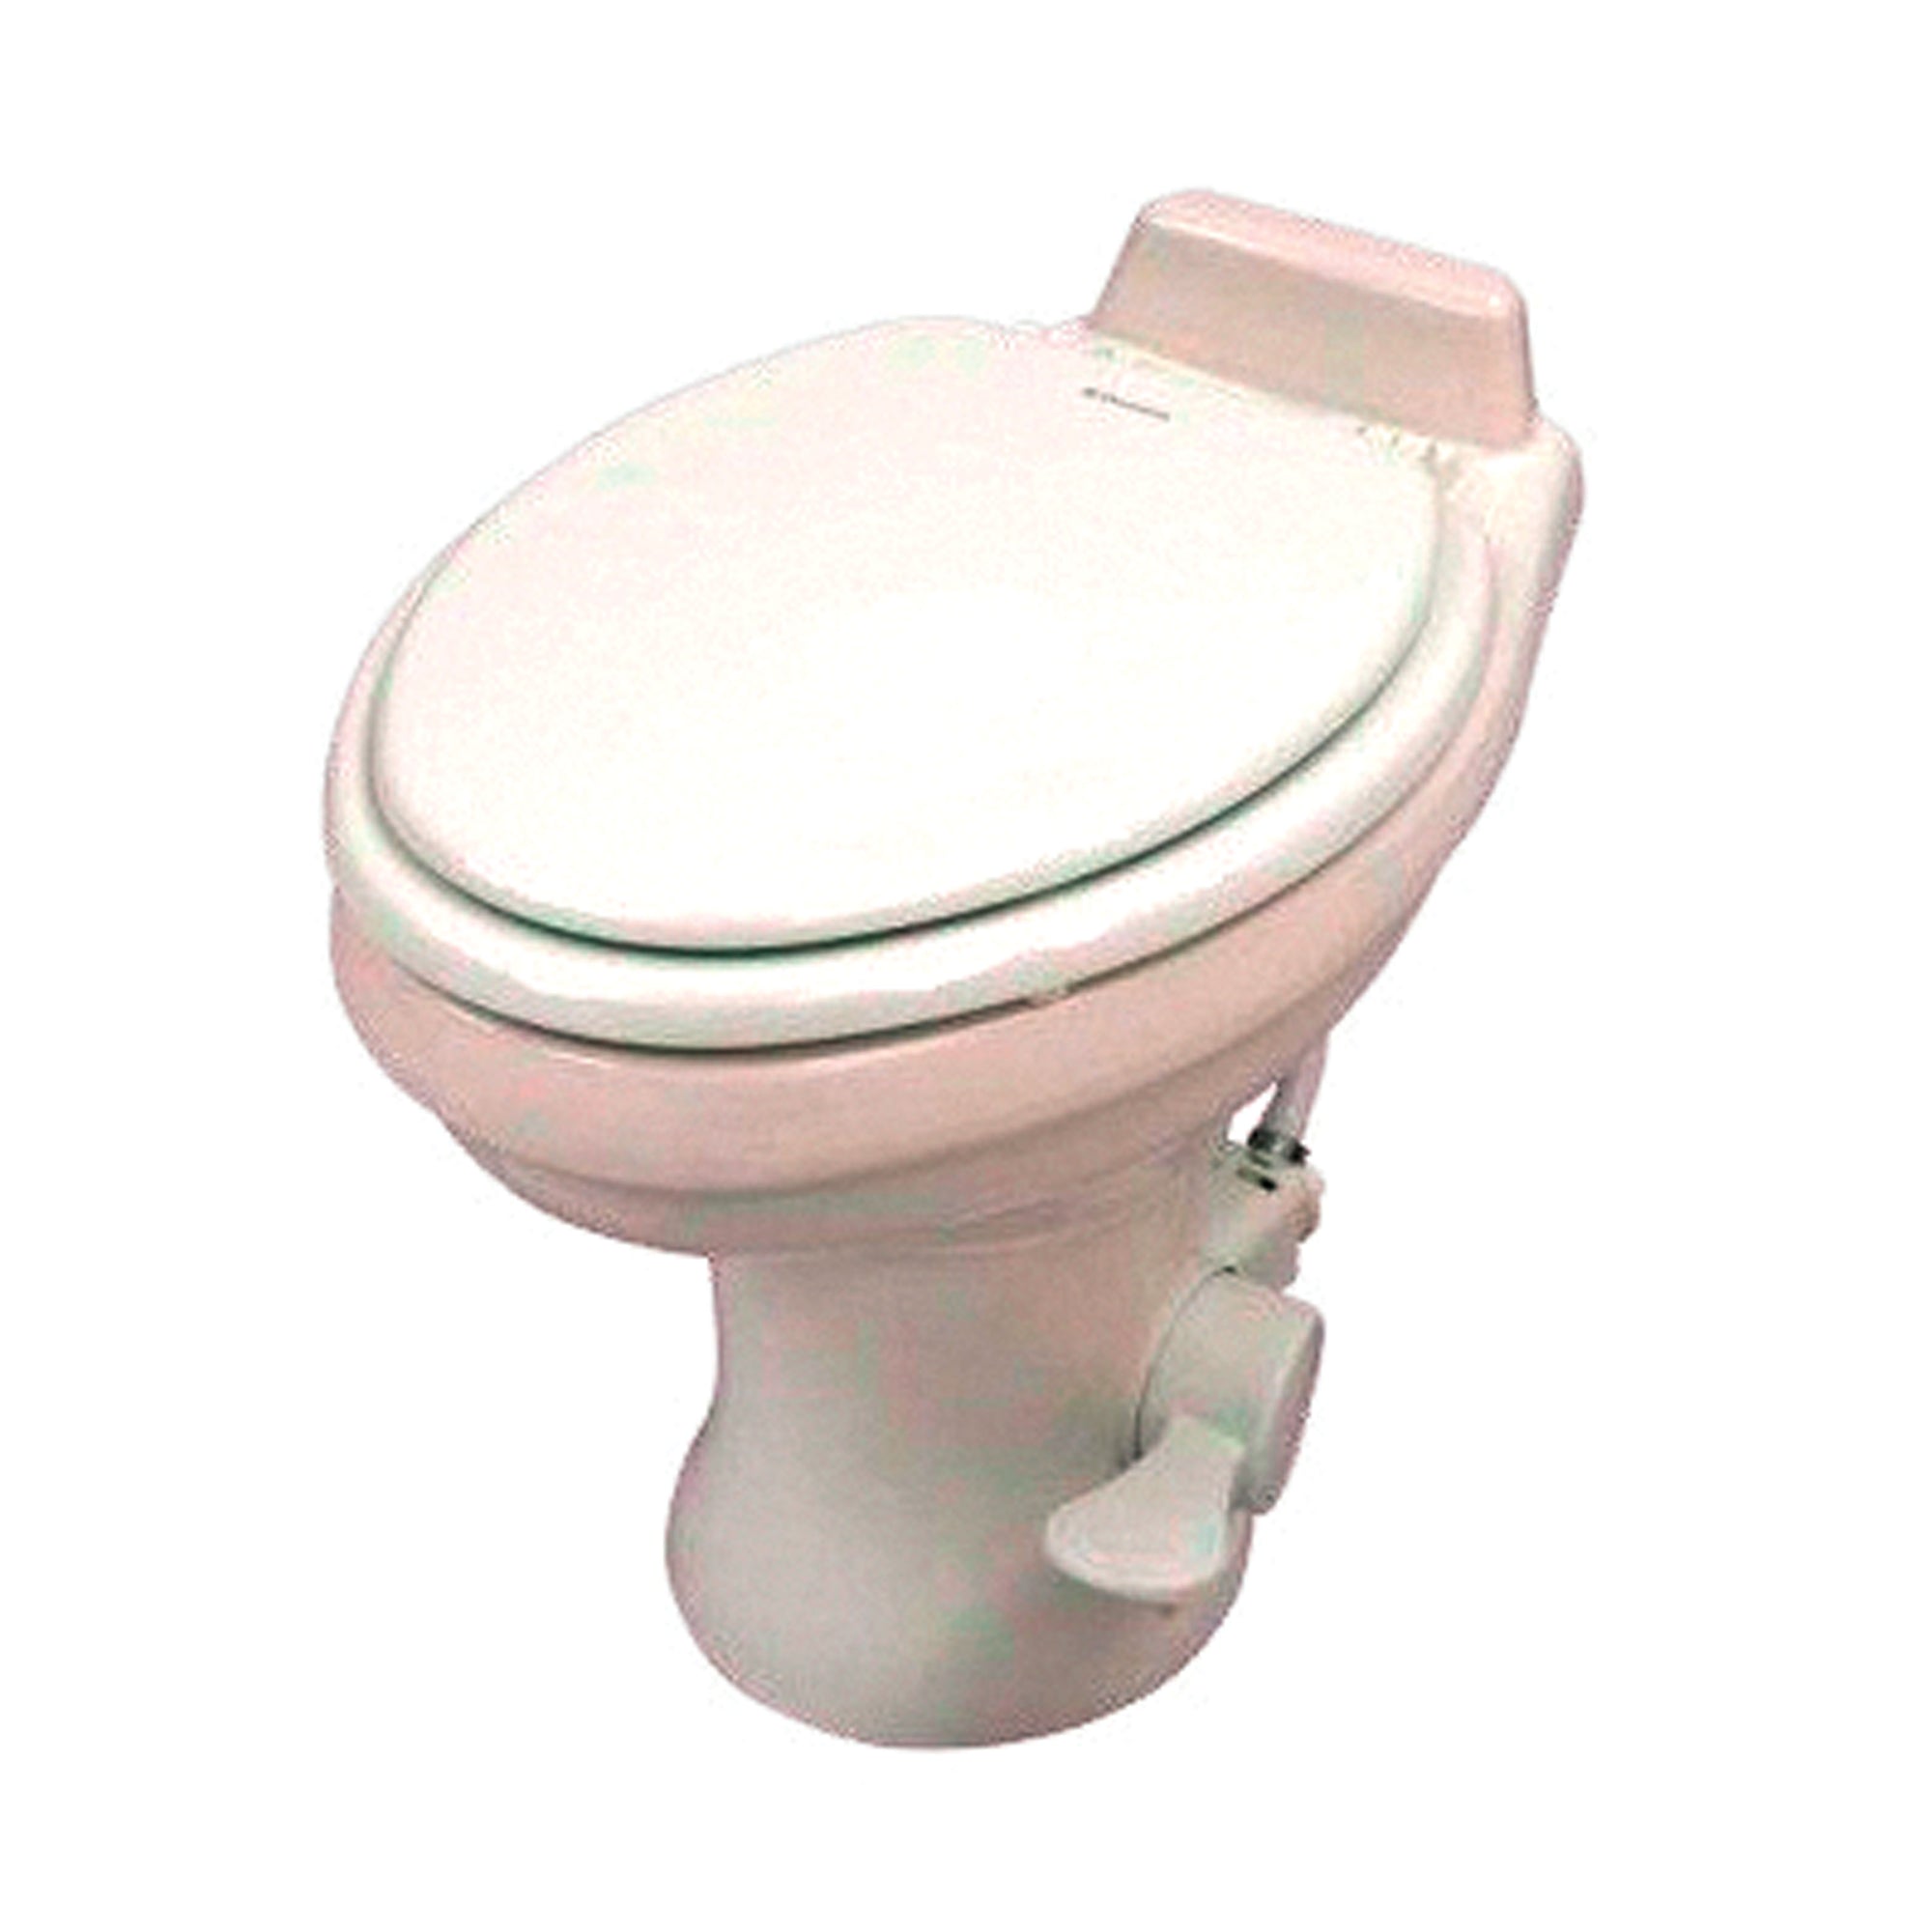 Dometic 302321783 Revolution 321 Series Toilet with Hand Sprayer - Bone